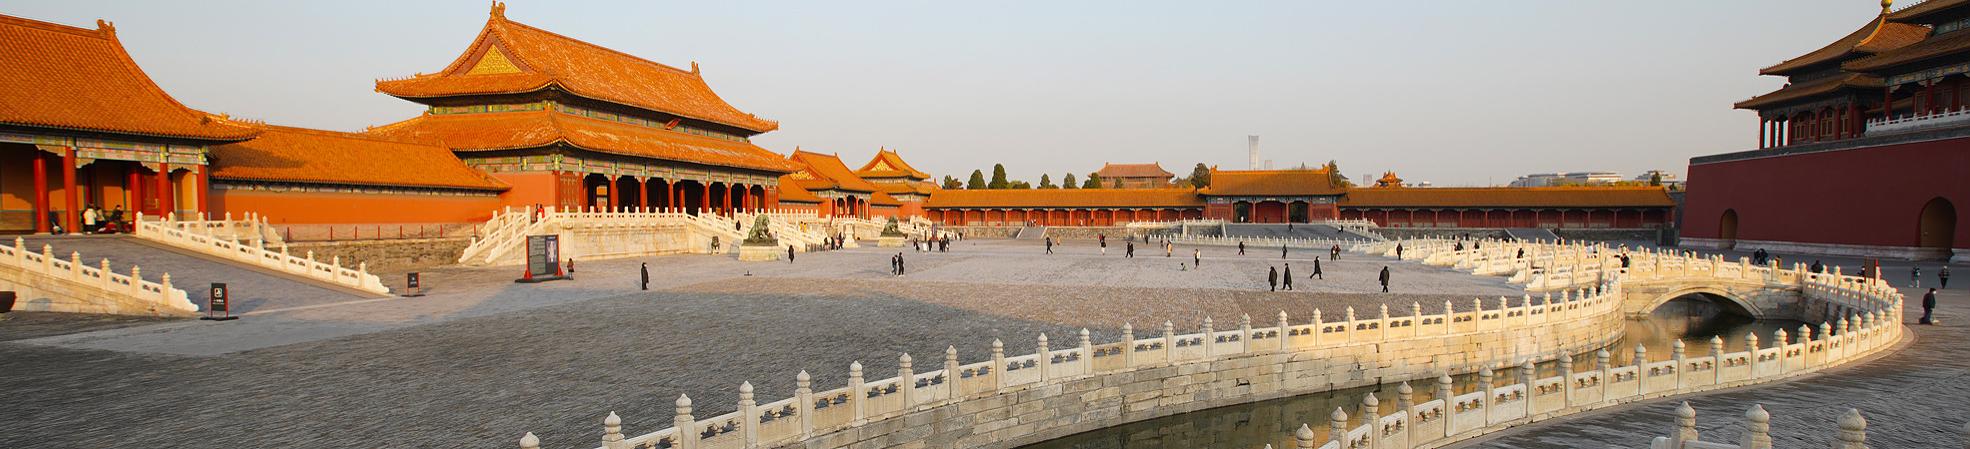 Peeking into Prince William's China Tour Itinerary